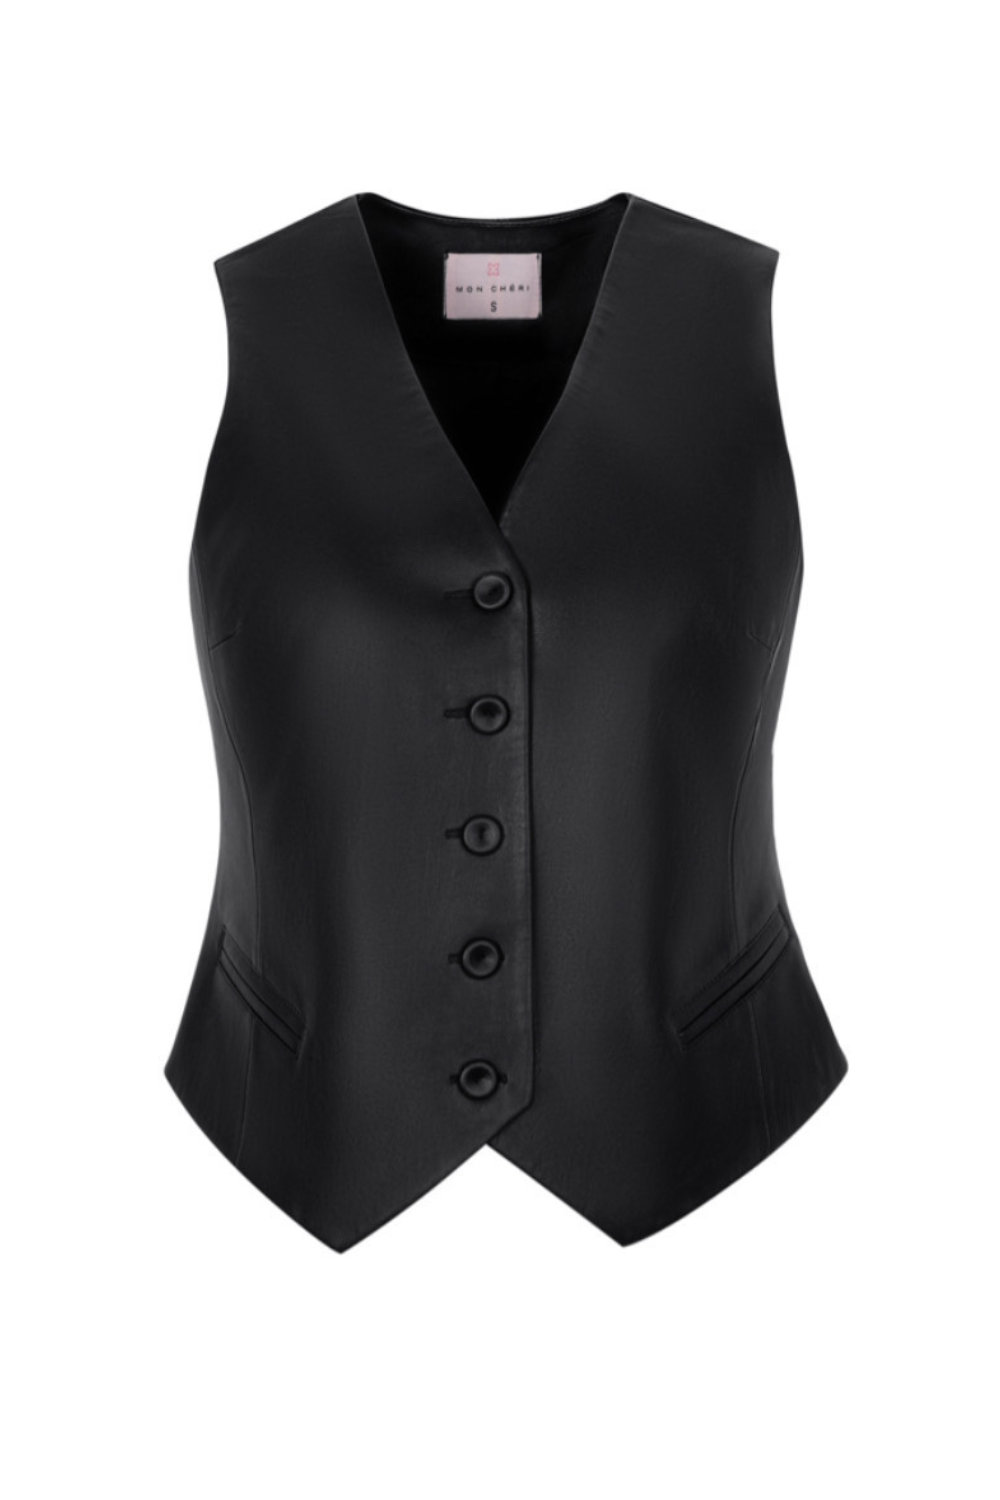 Eco leather vest black (Mon Cheri)